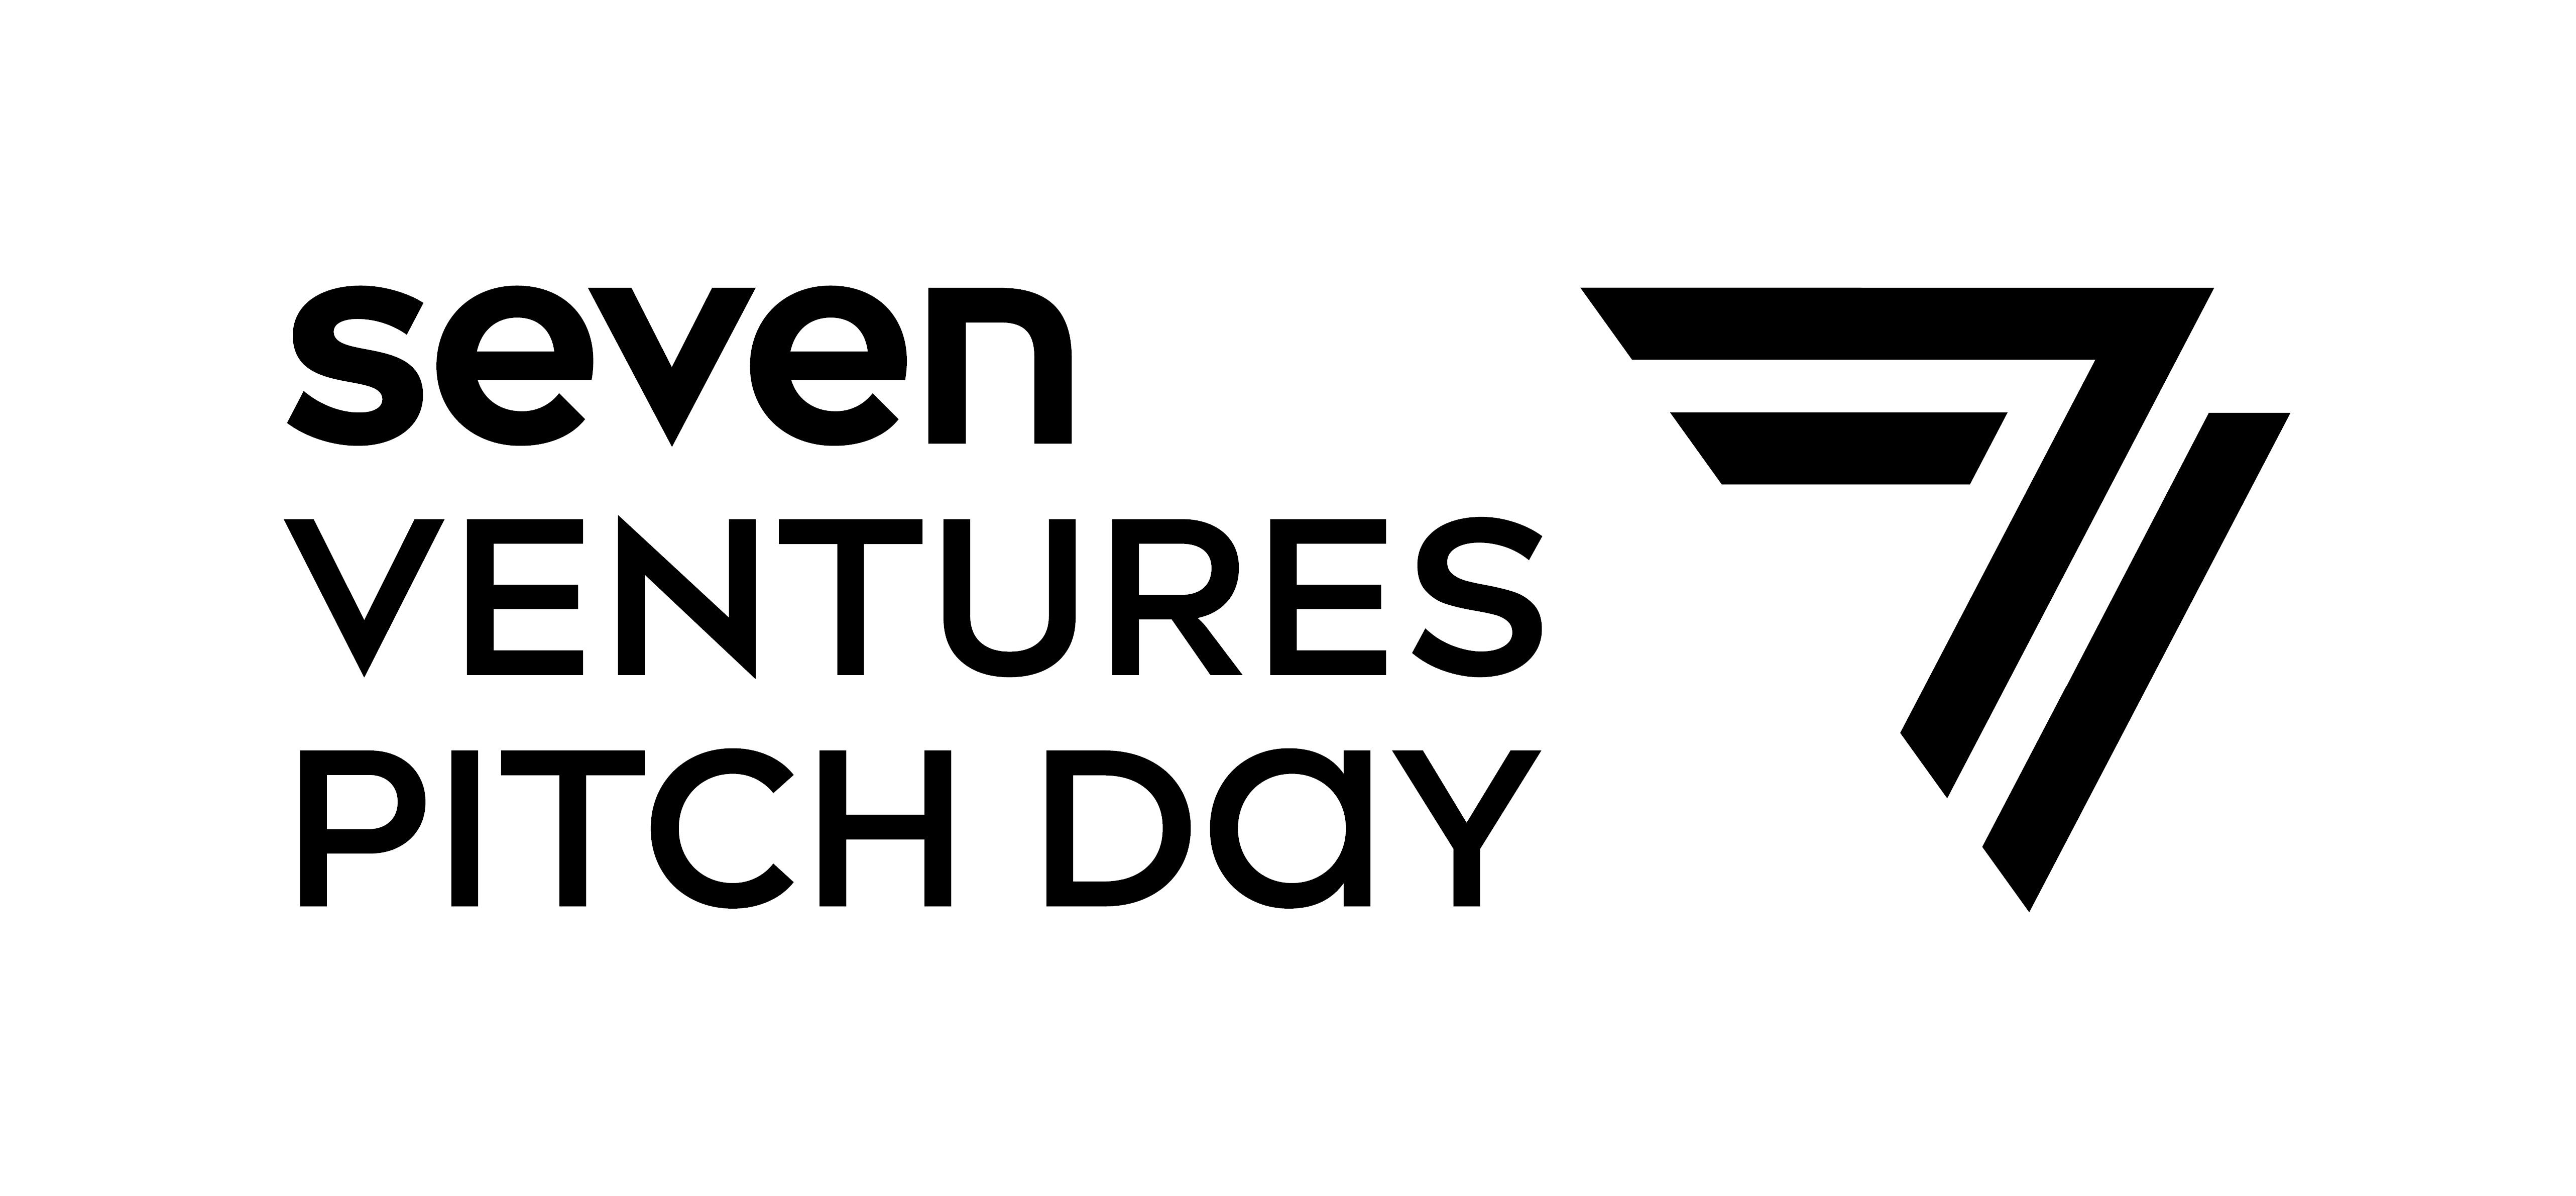 sevenventures_pitchday